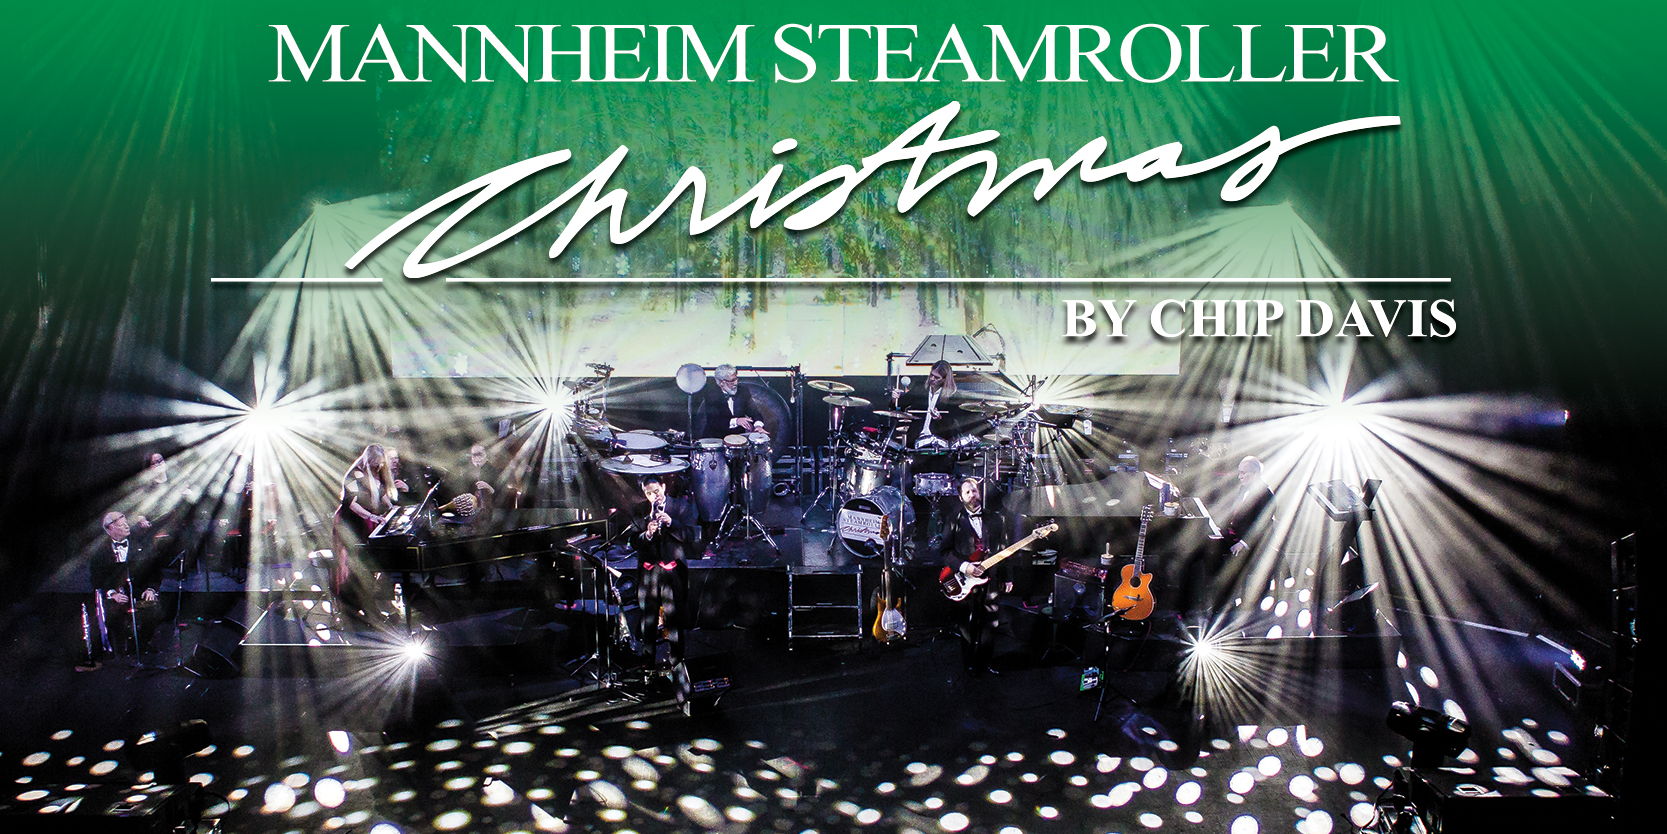 Mannheim Steamroller promotional image